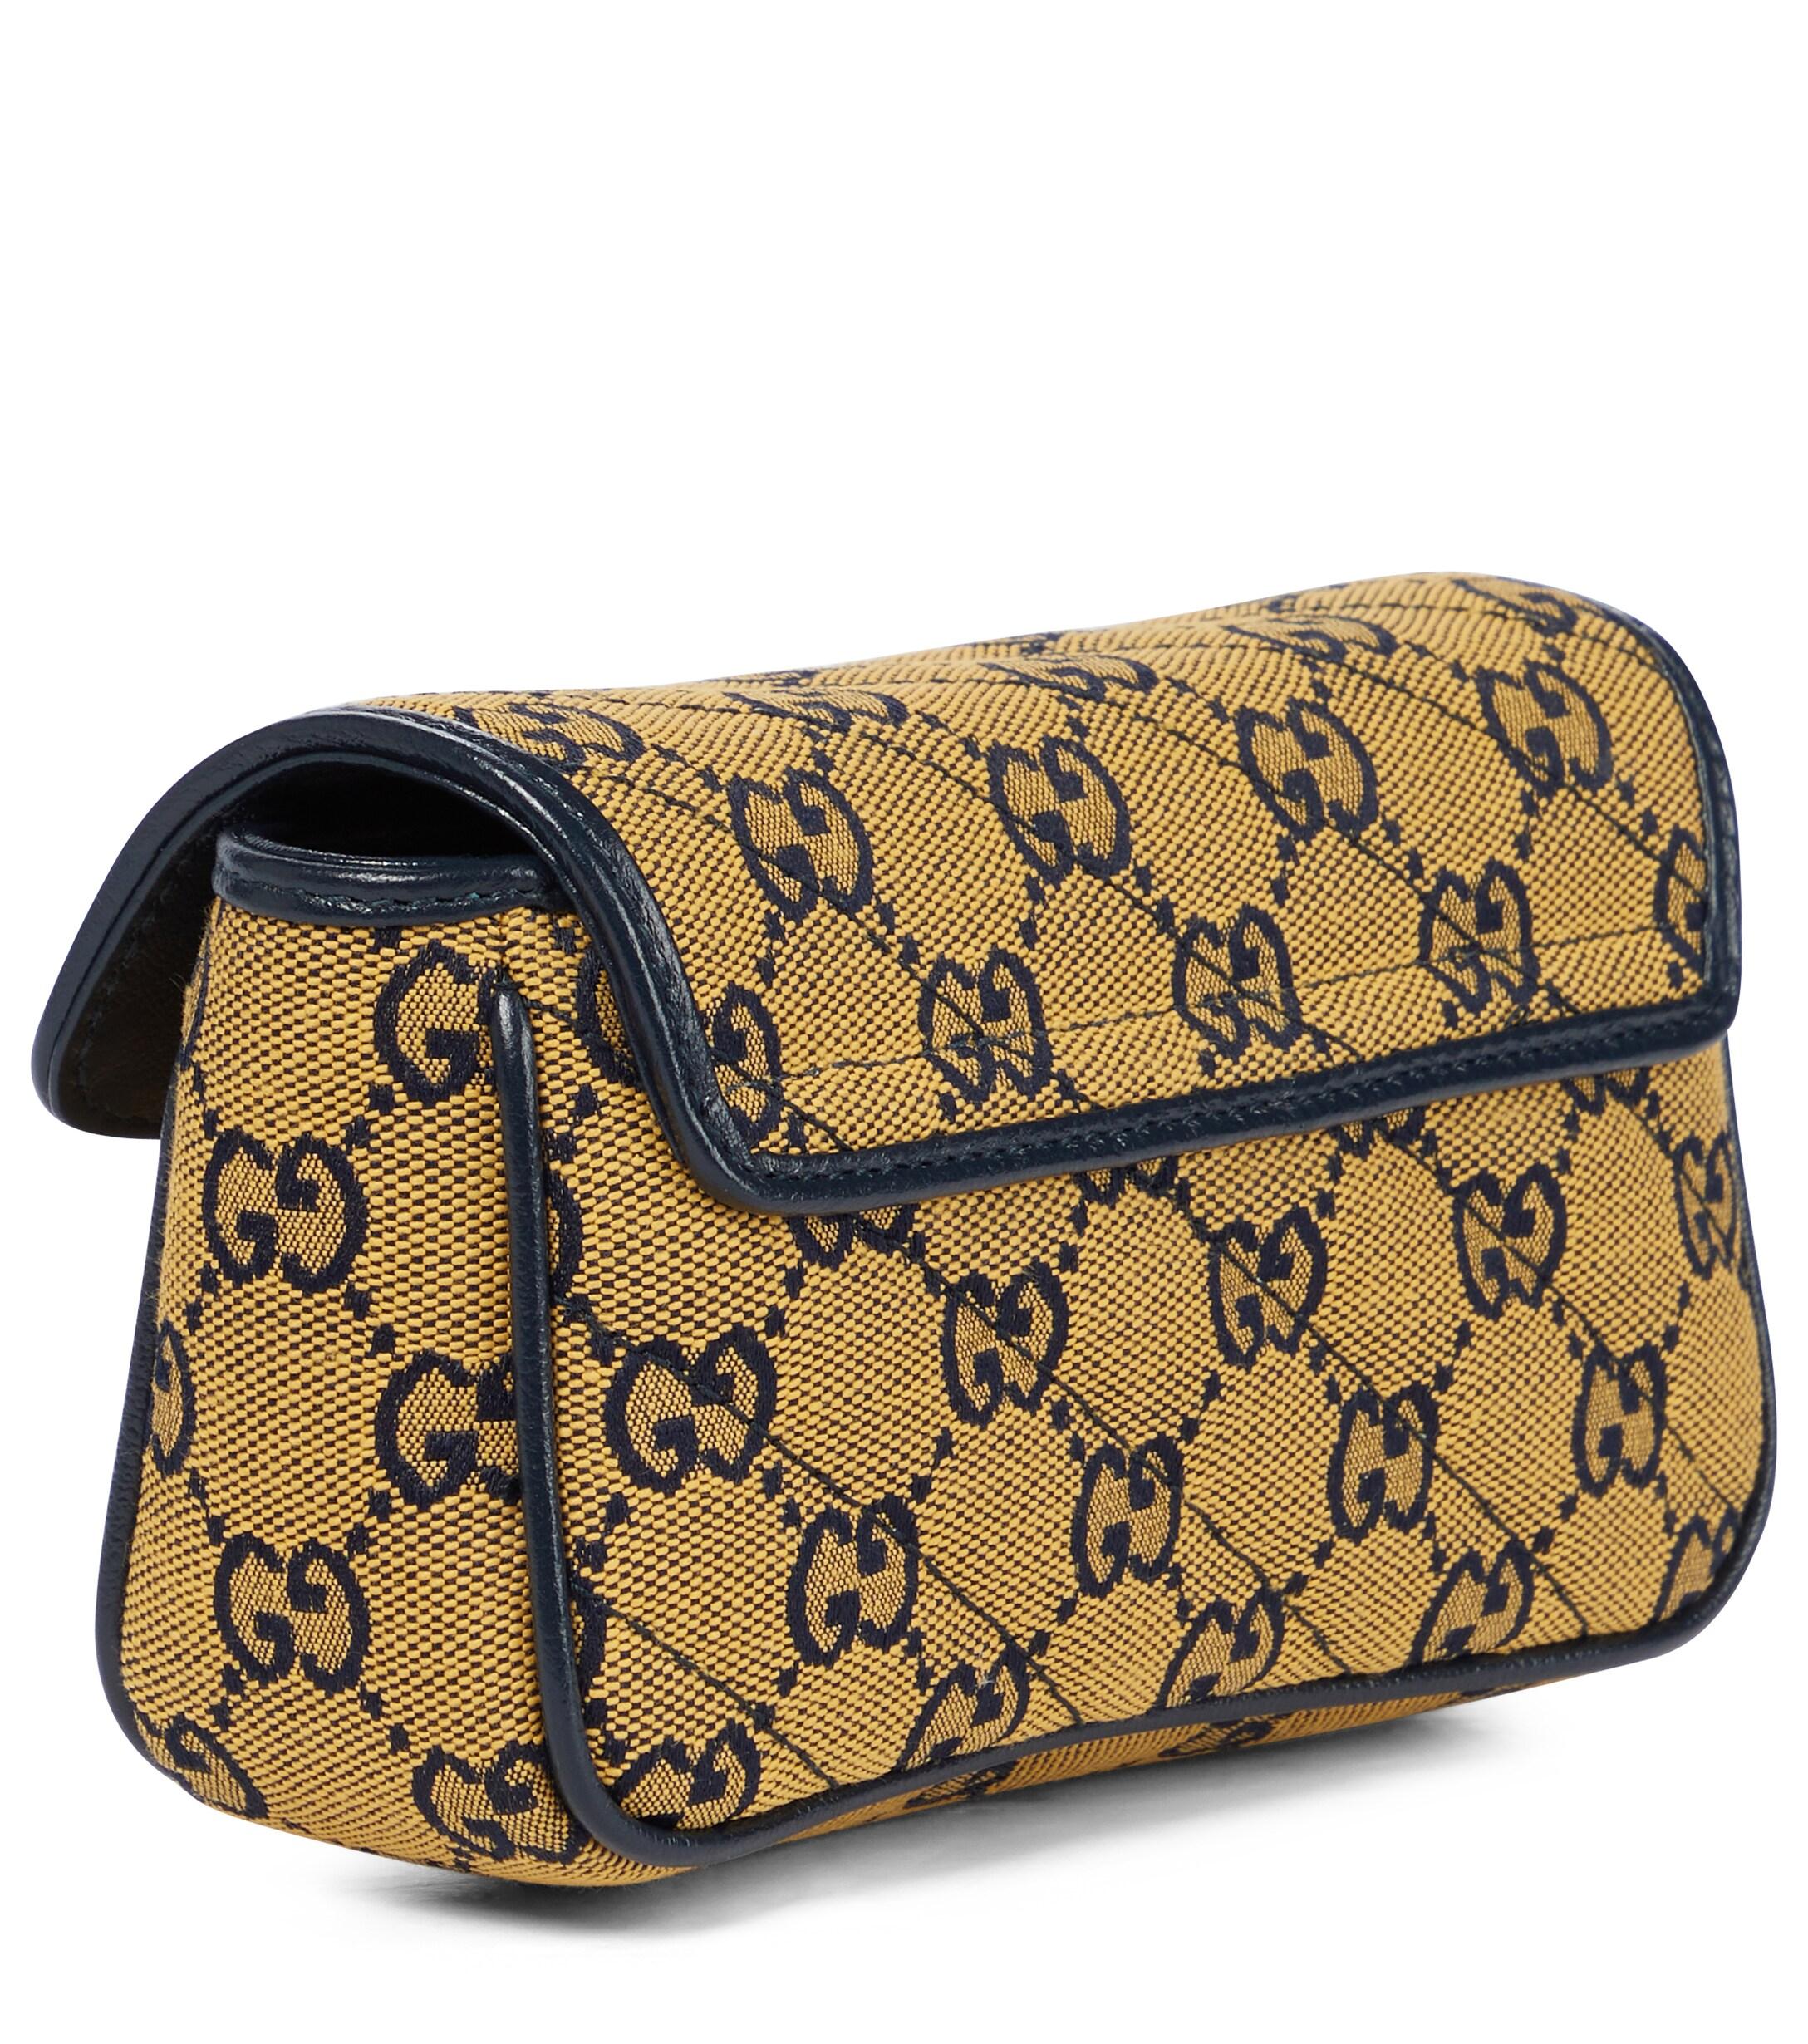 Gucci GG Marmont Super Mini Leather Cross-body Bag in Natural